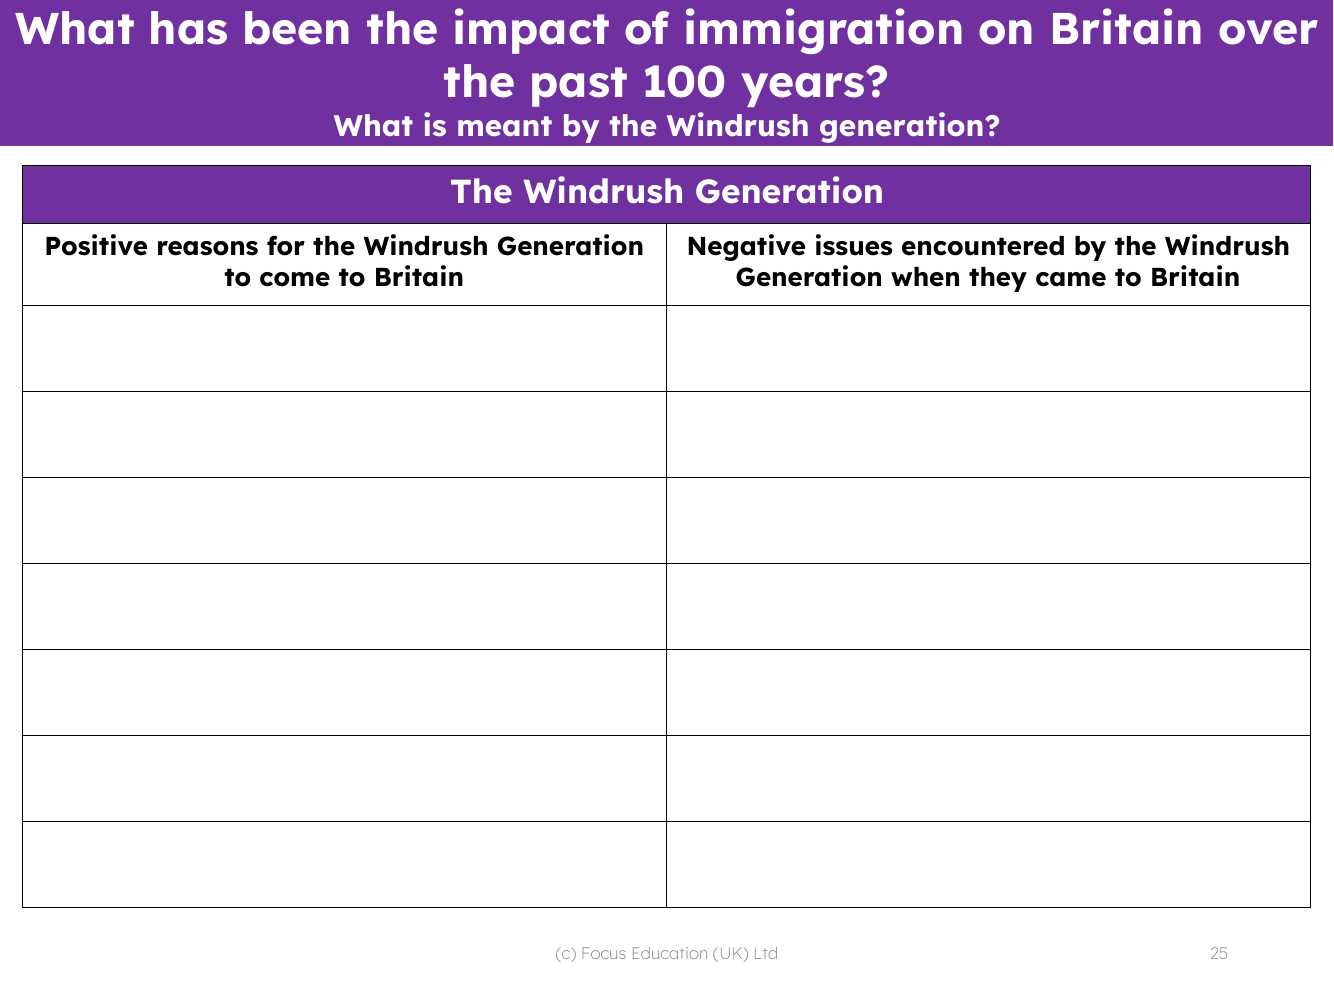 The Windrush Generation - Worksheet